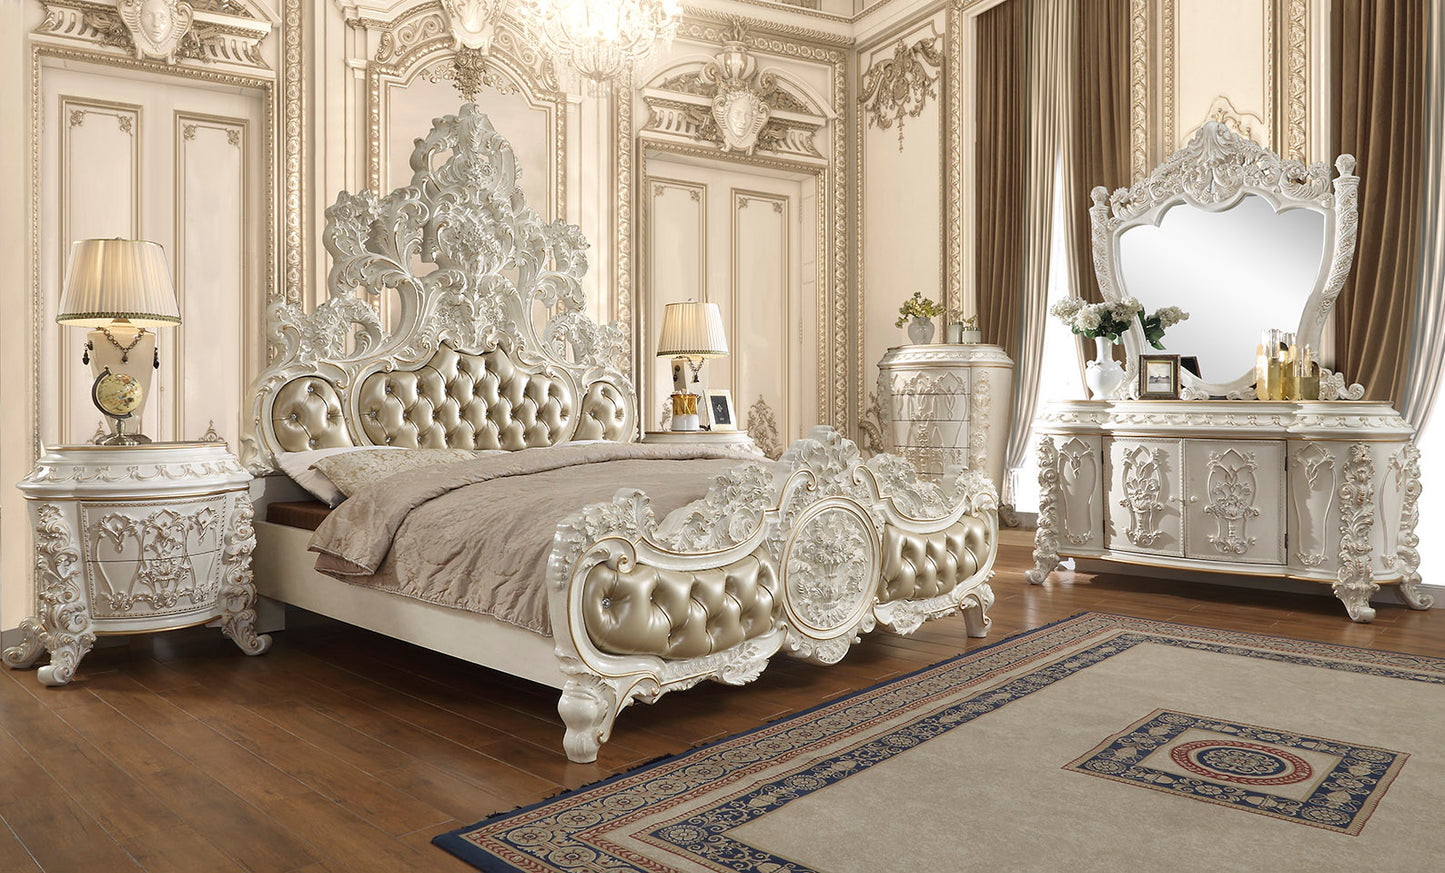 Leather E King 5PC Bedroom Set in Antique White & Gold Finish EK1806-5PC